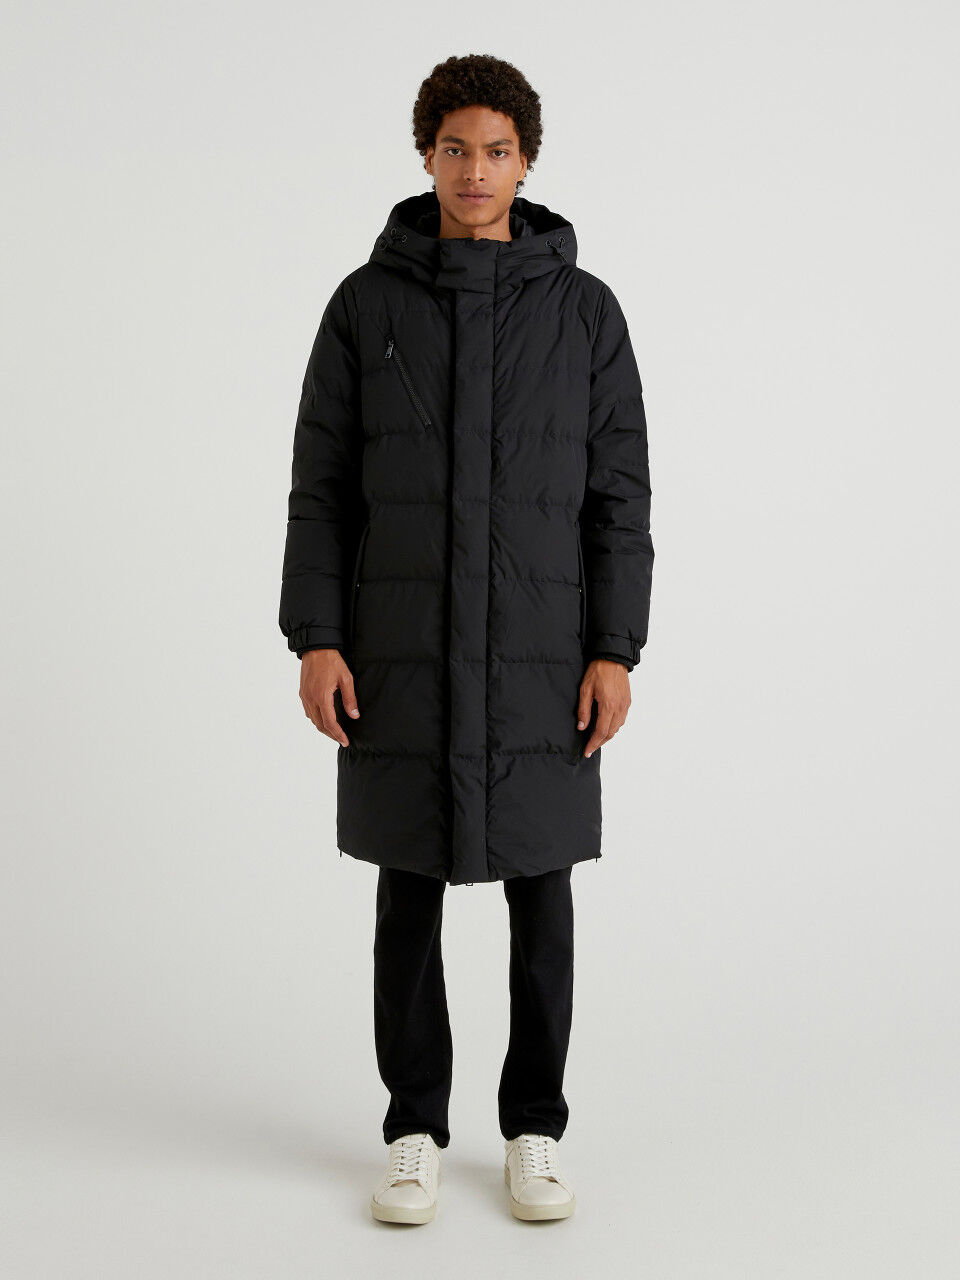 UCB Bonded Fleece Jackets - CGP-3300 : consortiumgifts.com : Winter wear